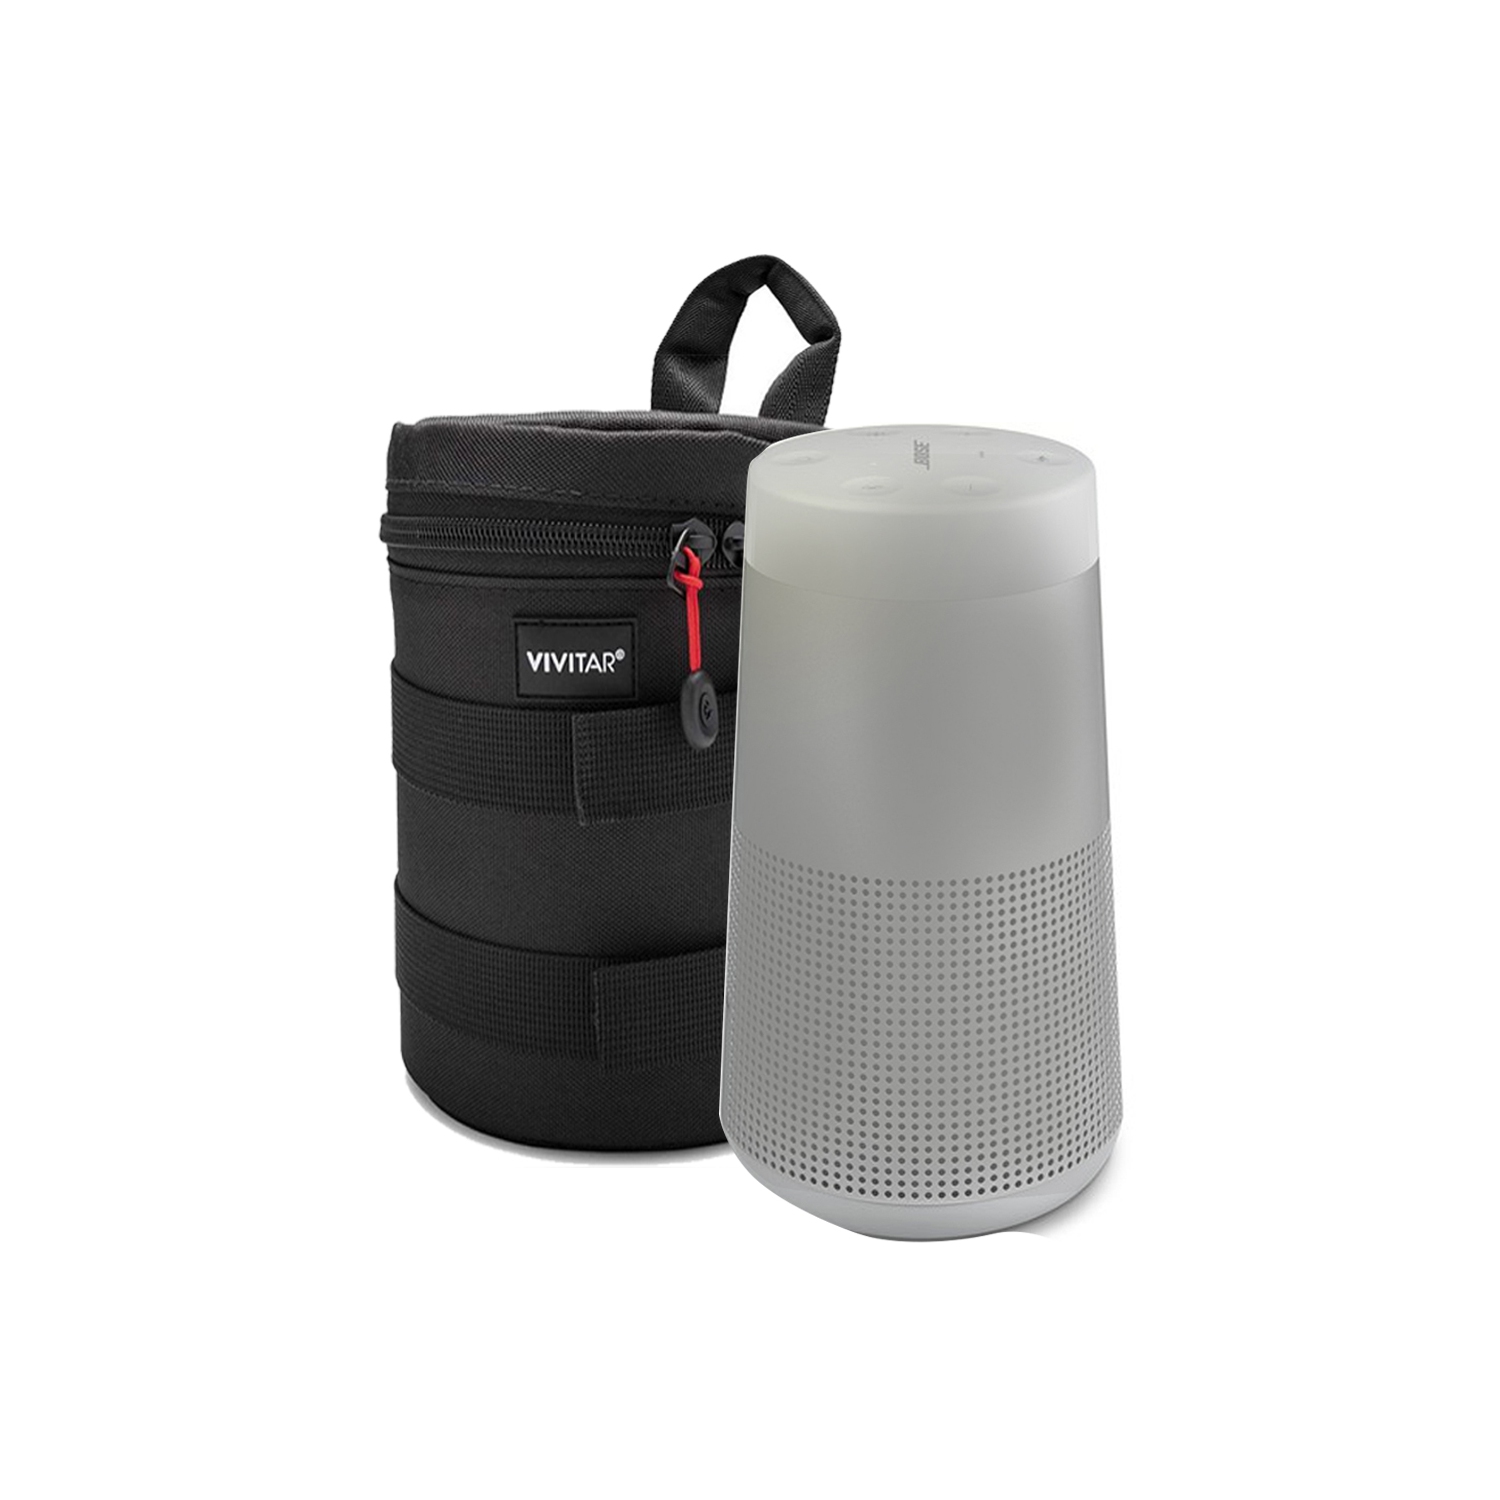 Bose SoundLink Revolve Bluetooth Speaker Lux Gray with Vivitar 6 Inch Lens Case